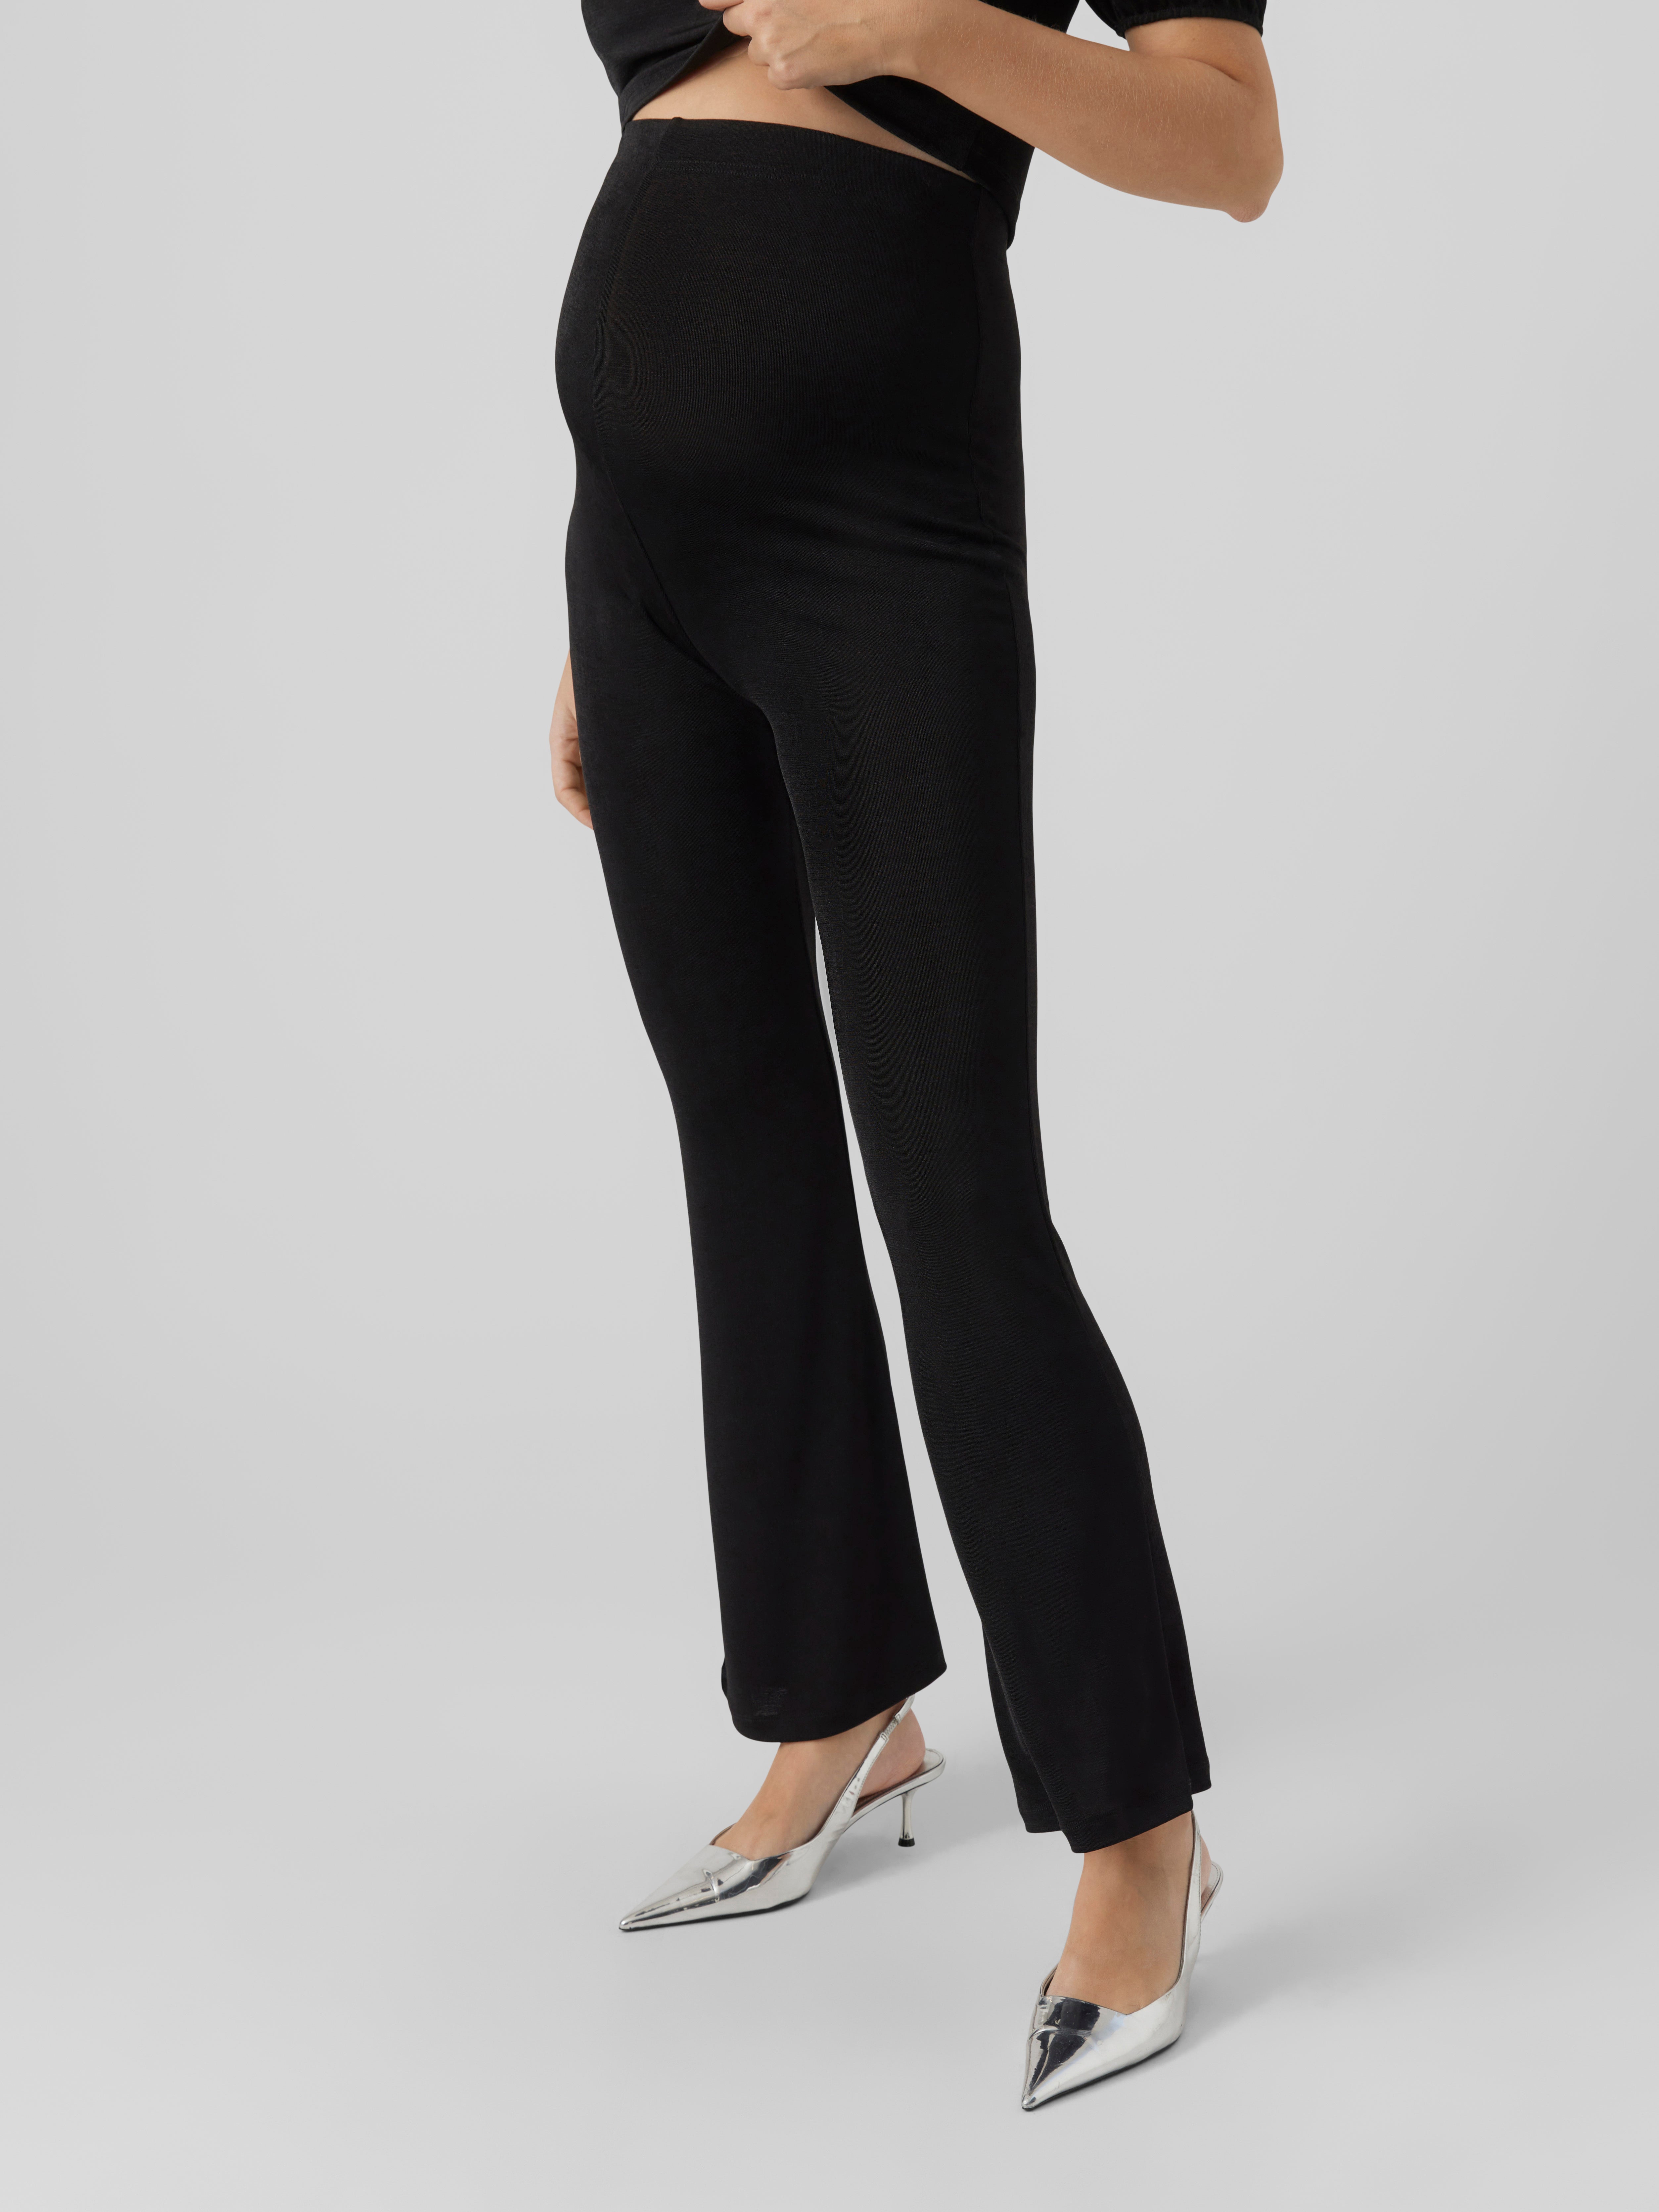 Adidas Maternity Trousers Leggings Yoga Baby Gymnastics Olive Green | eBay